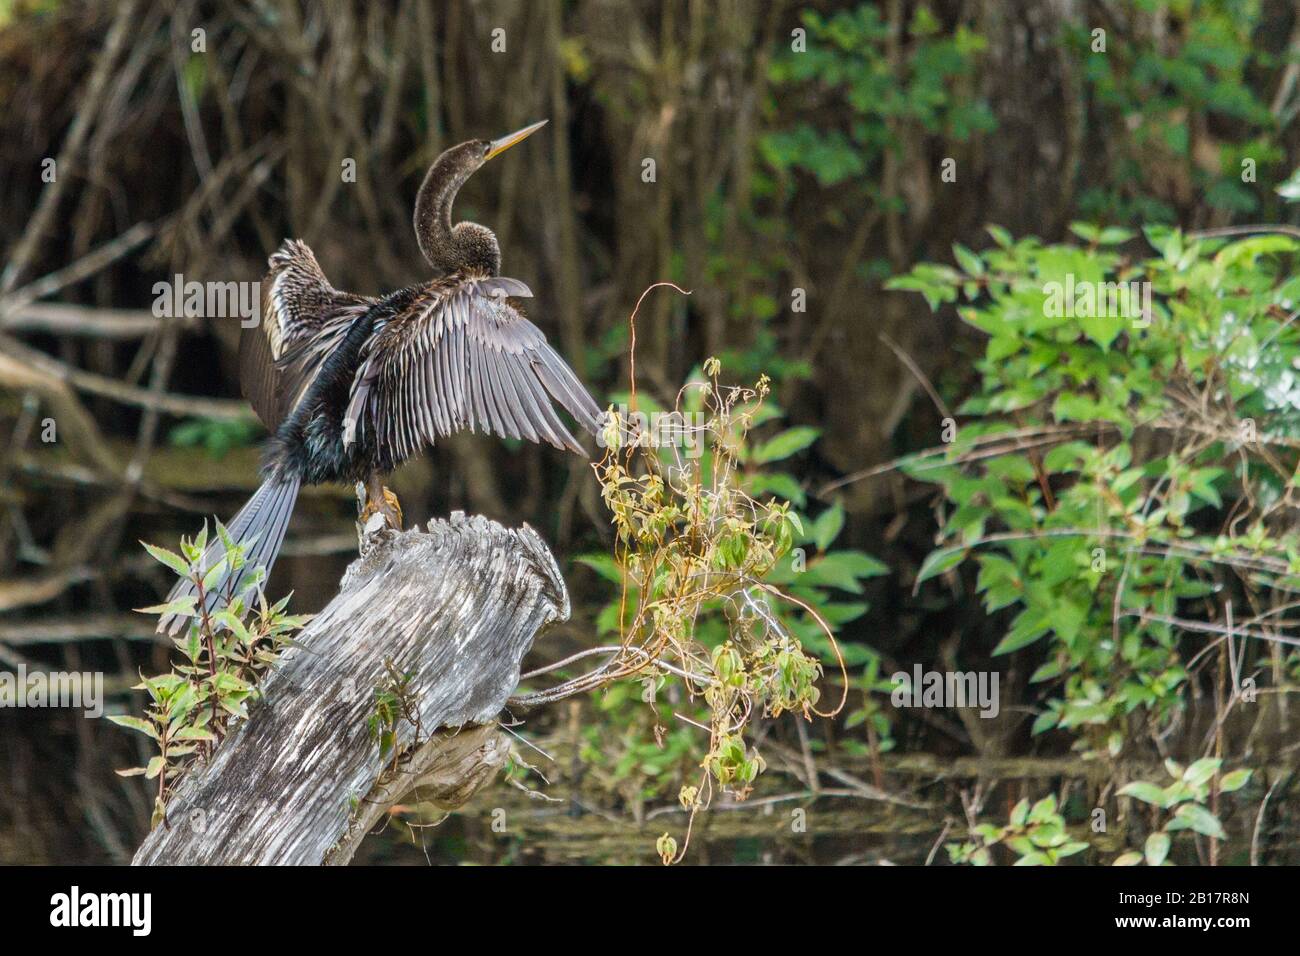 Anhinga drying his wings. Stock Photo